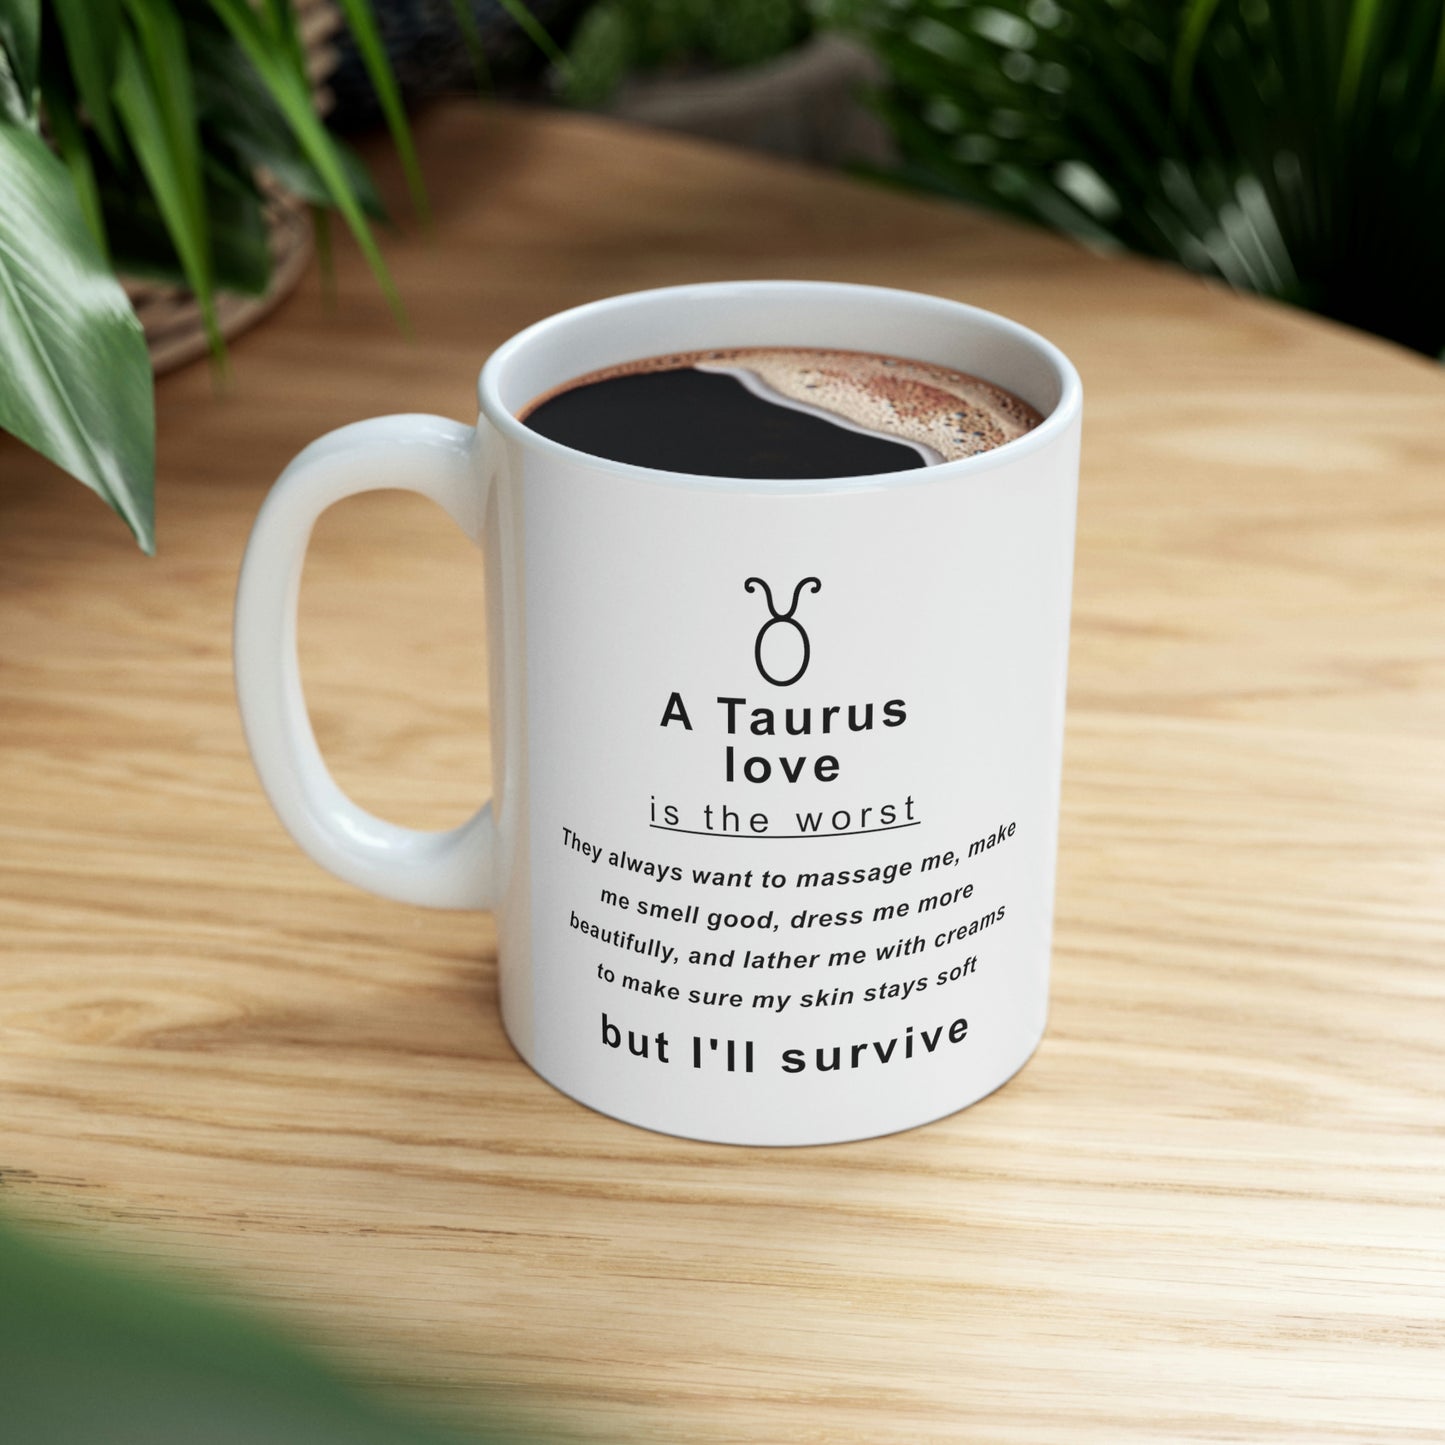 Taurus Mug: "Taurus Love is the Worst!" - full text in description